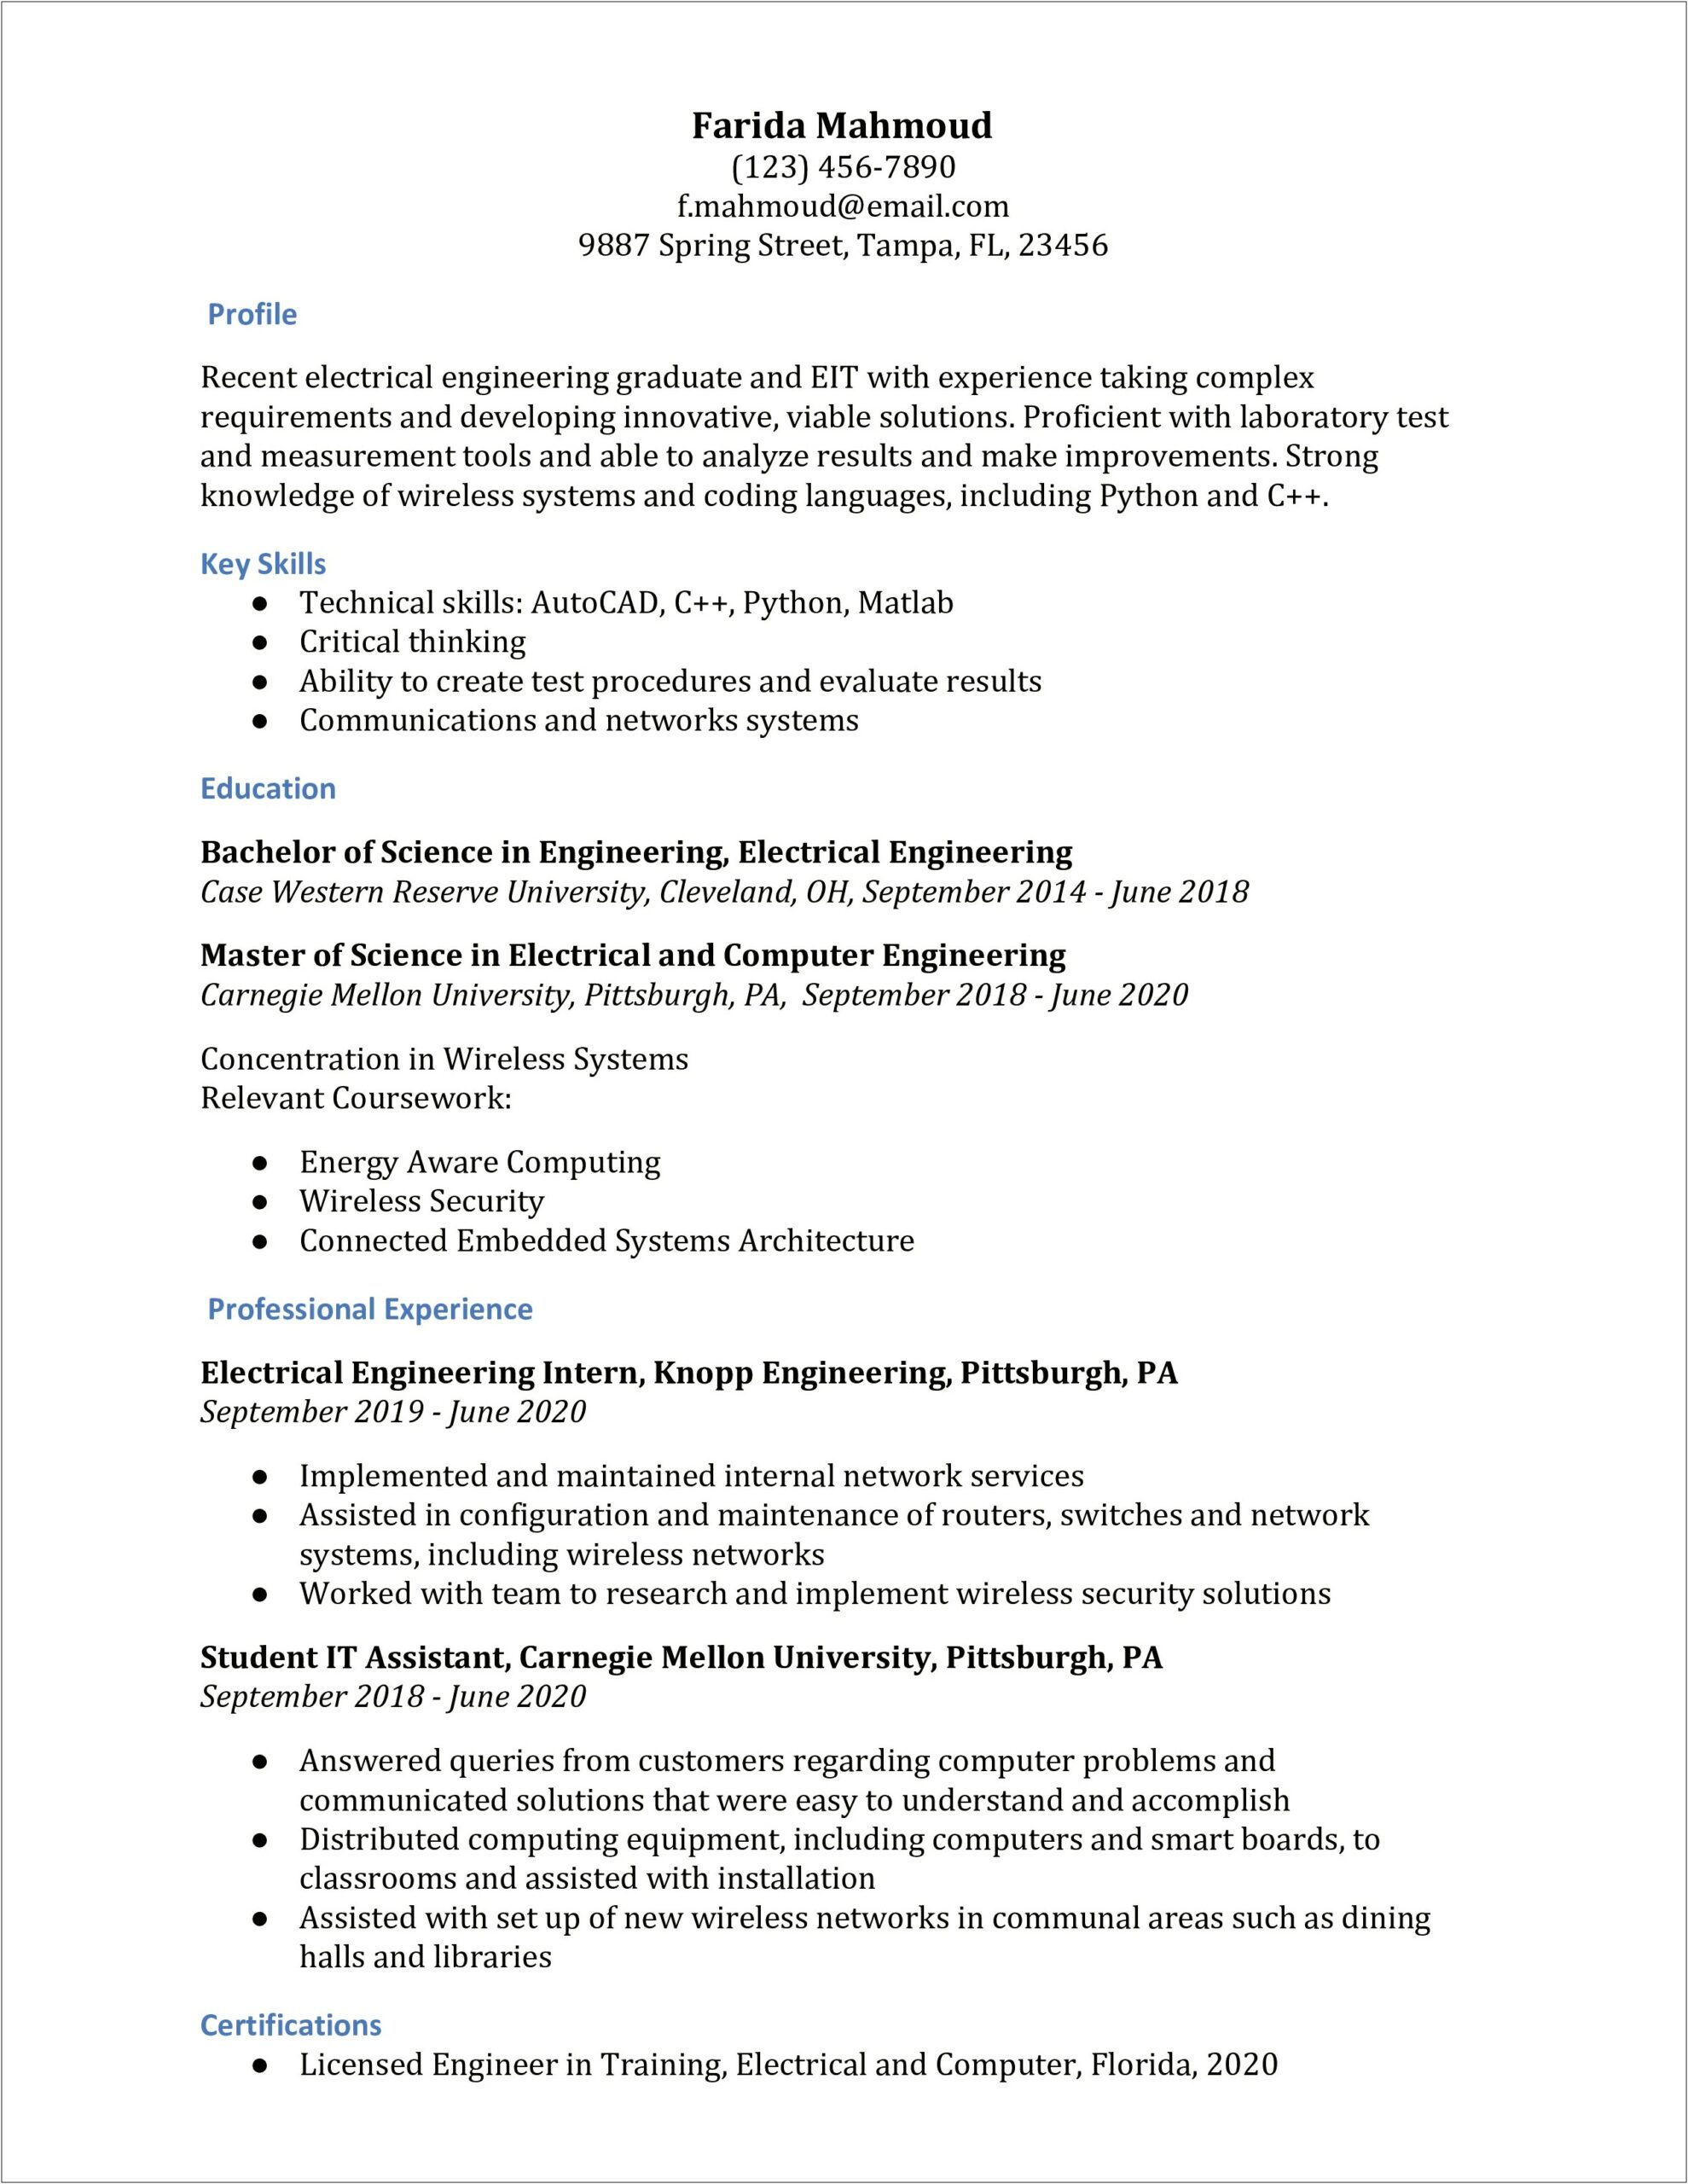 Resume Objective Electrical Engineer Internship